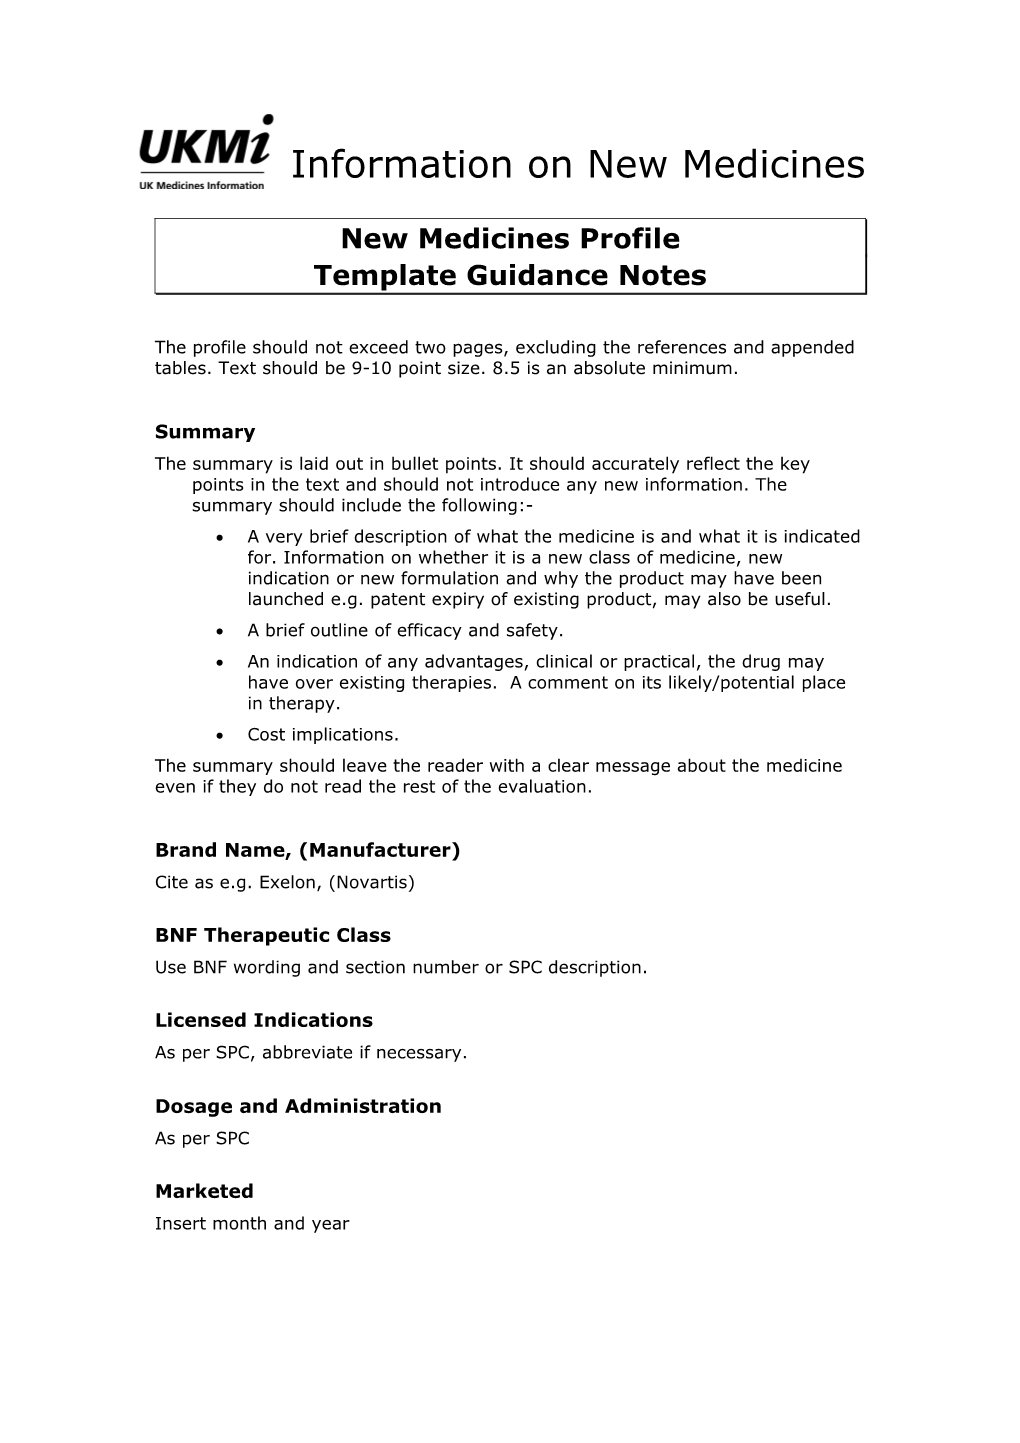 Information on New Medicines